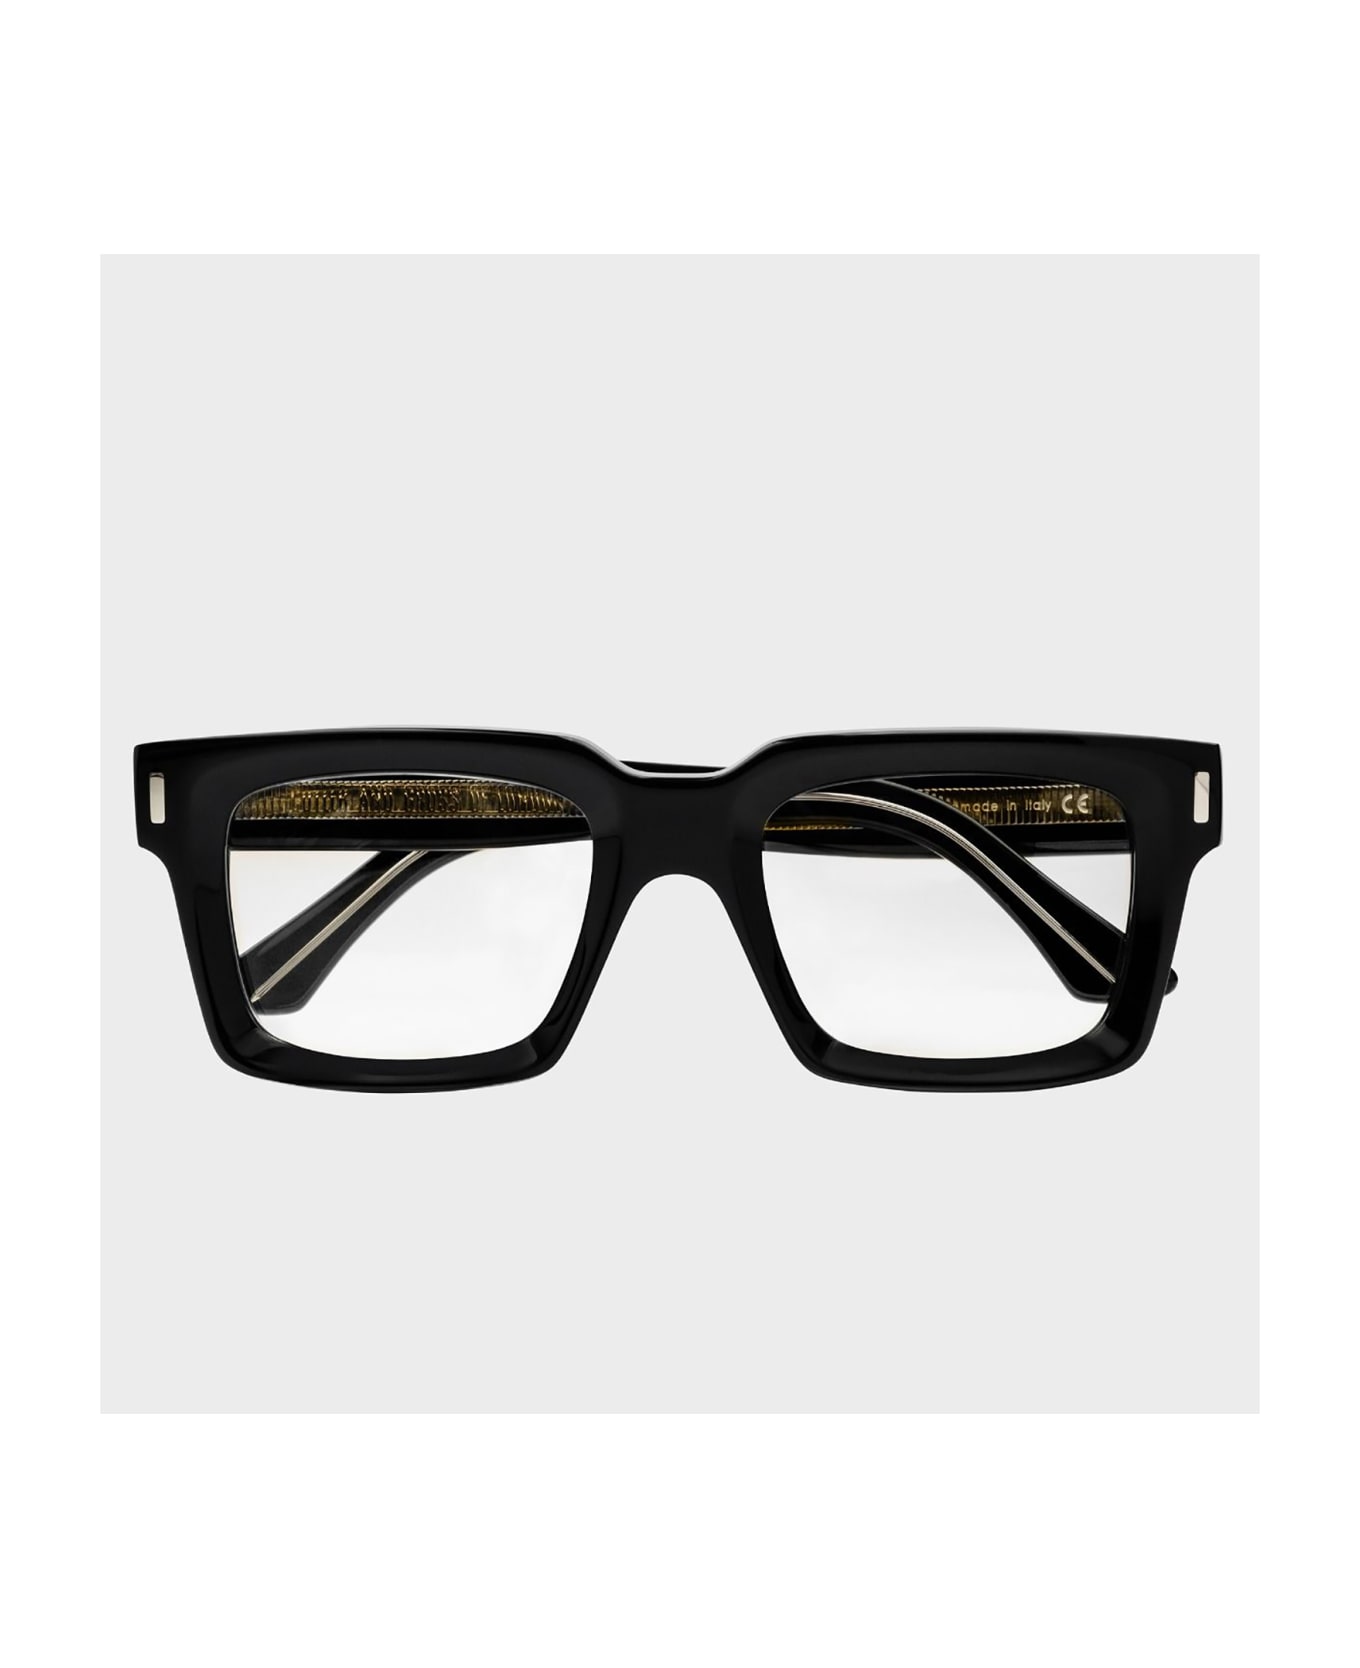 Cutler and Gross 1386 Eyewear - Black アイウェア